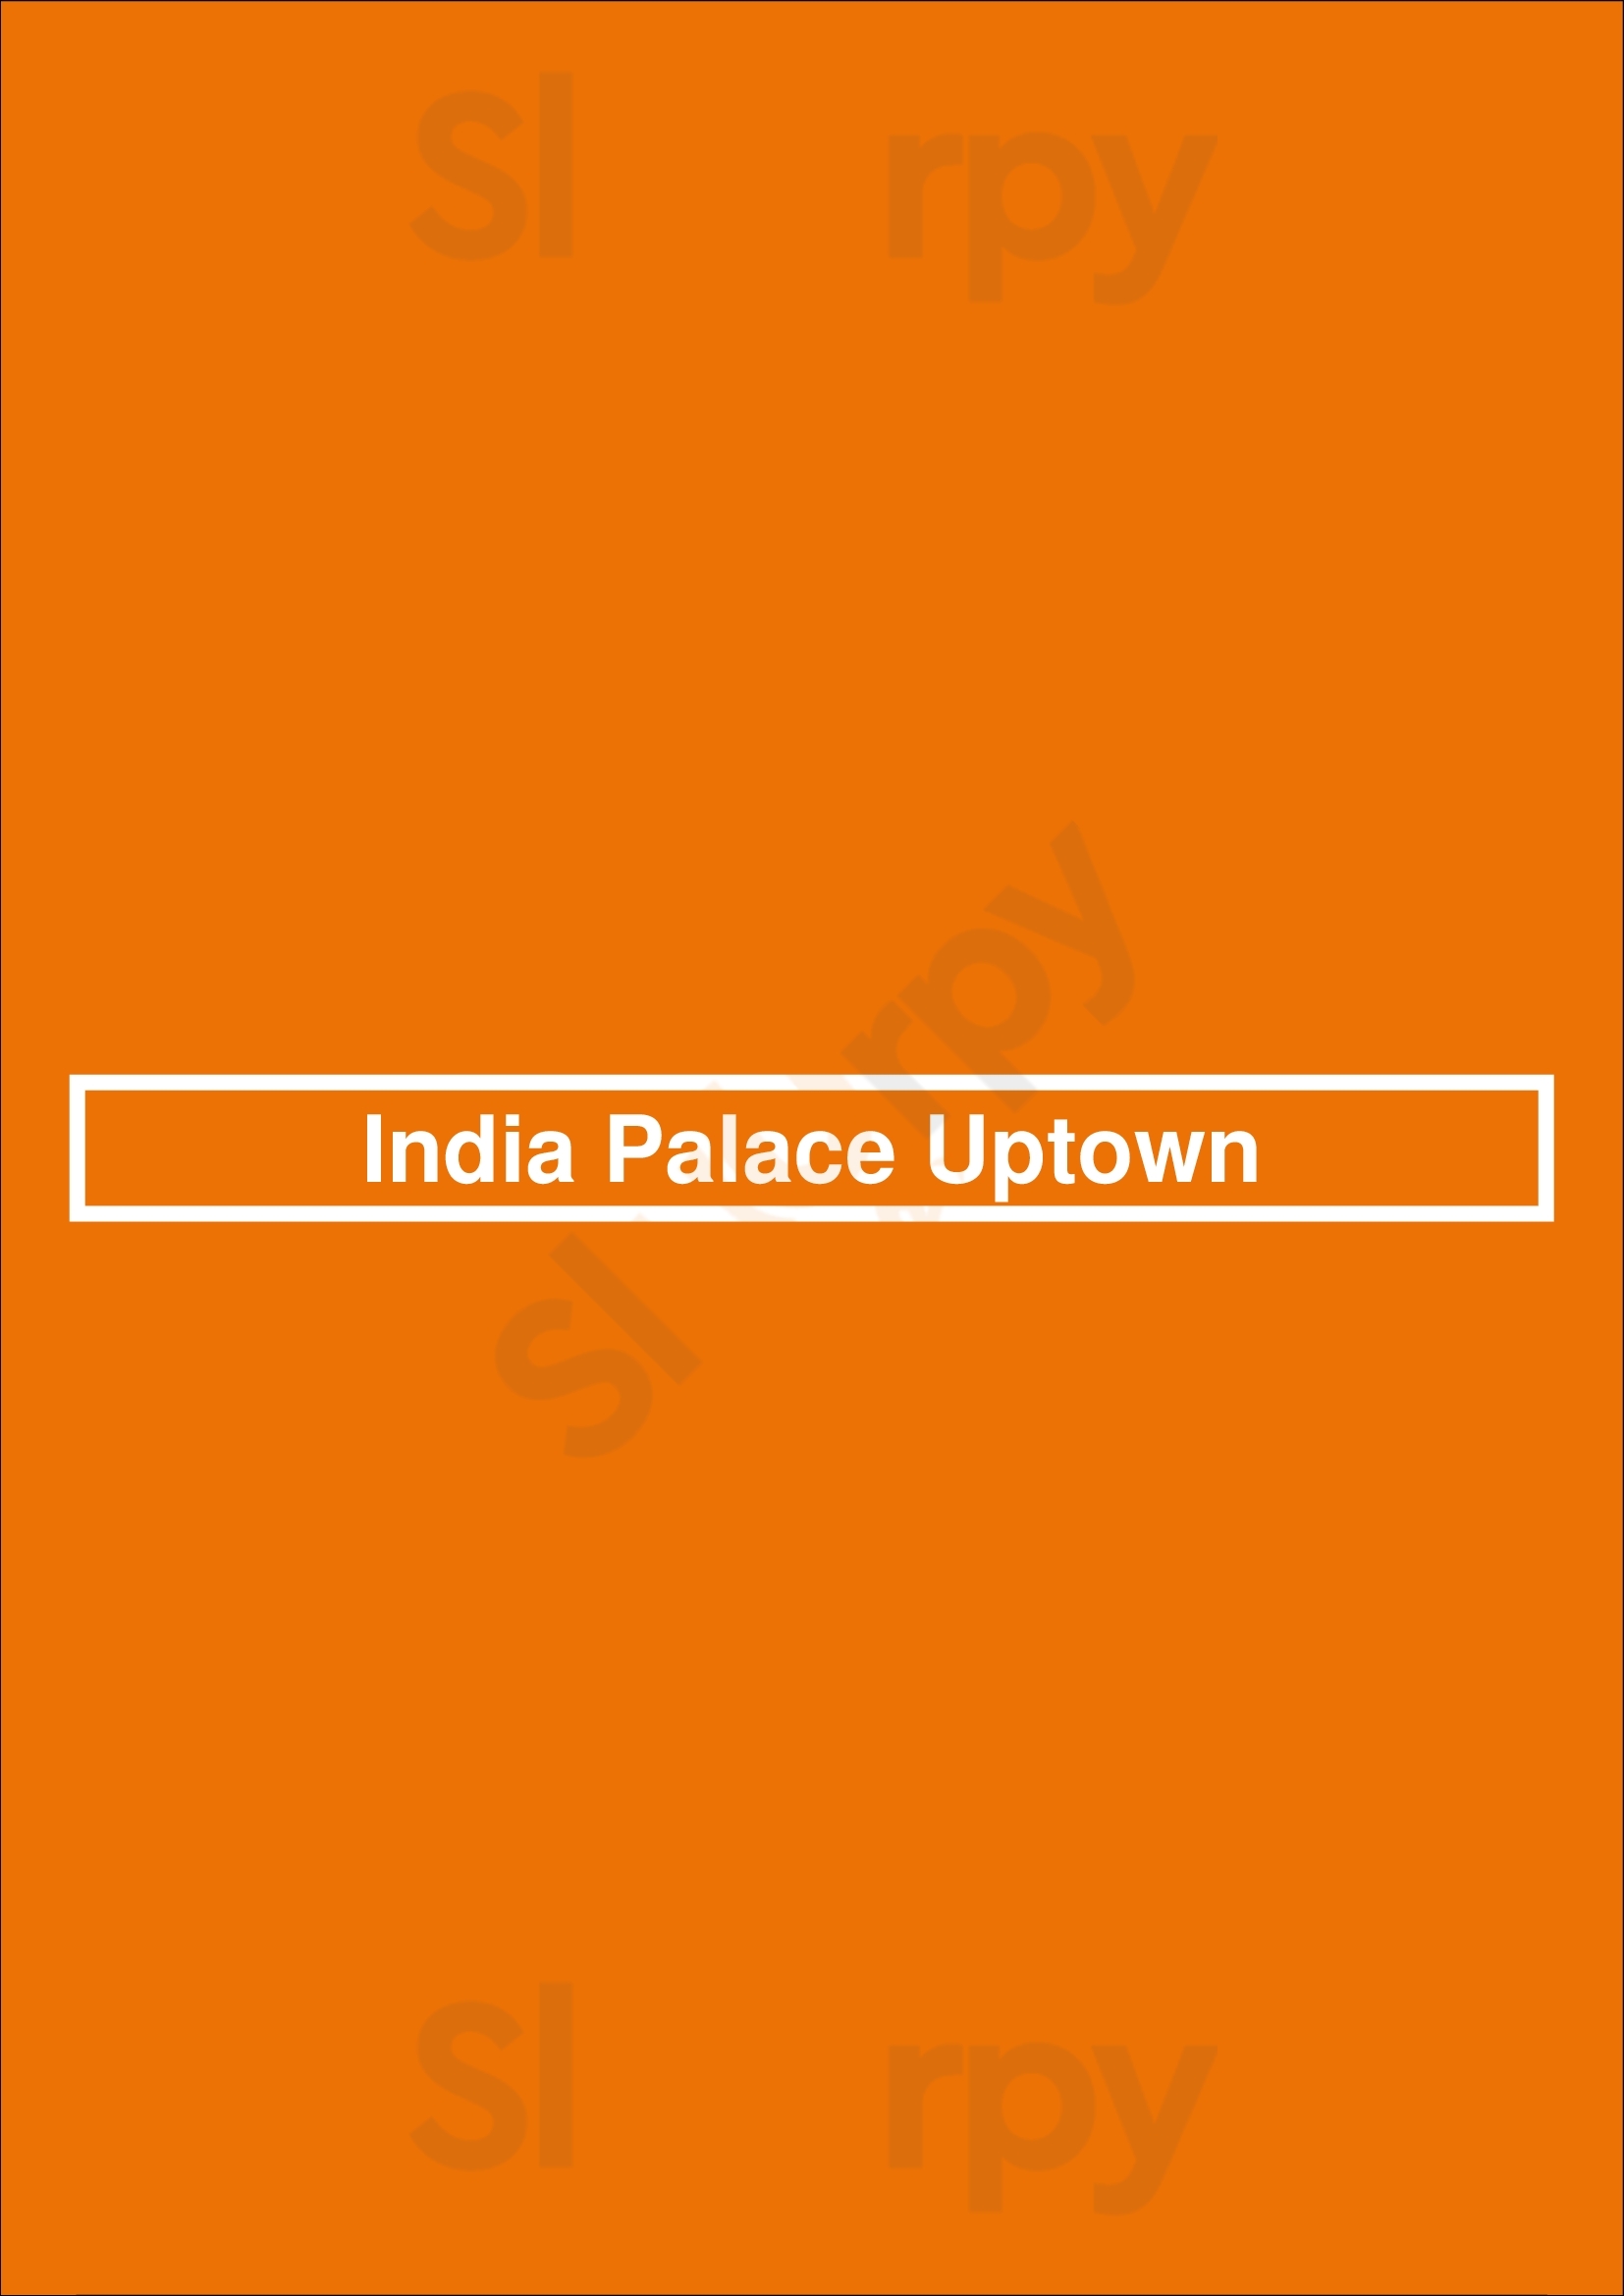 India Palace Uptown Minneapolis Menu - 1